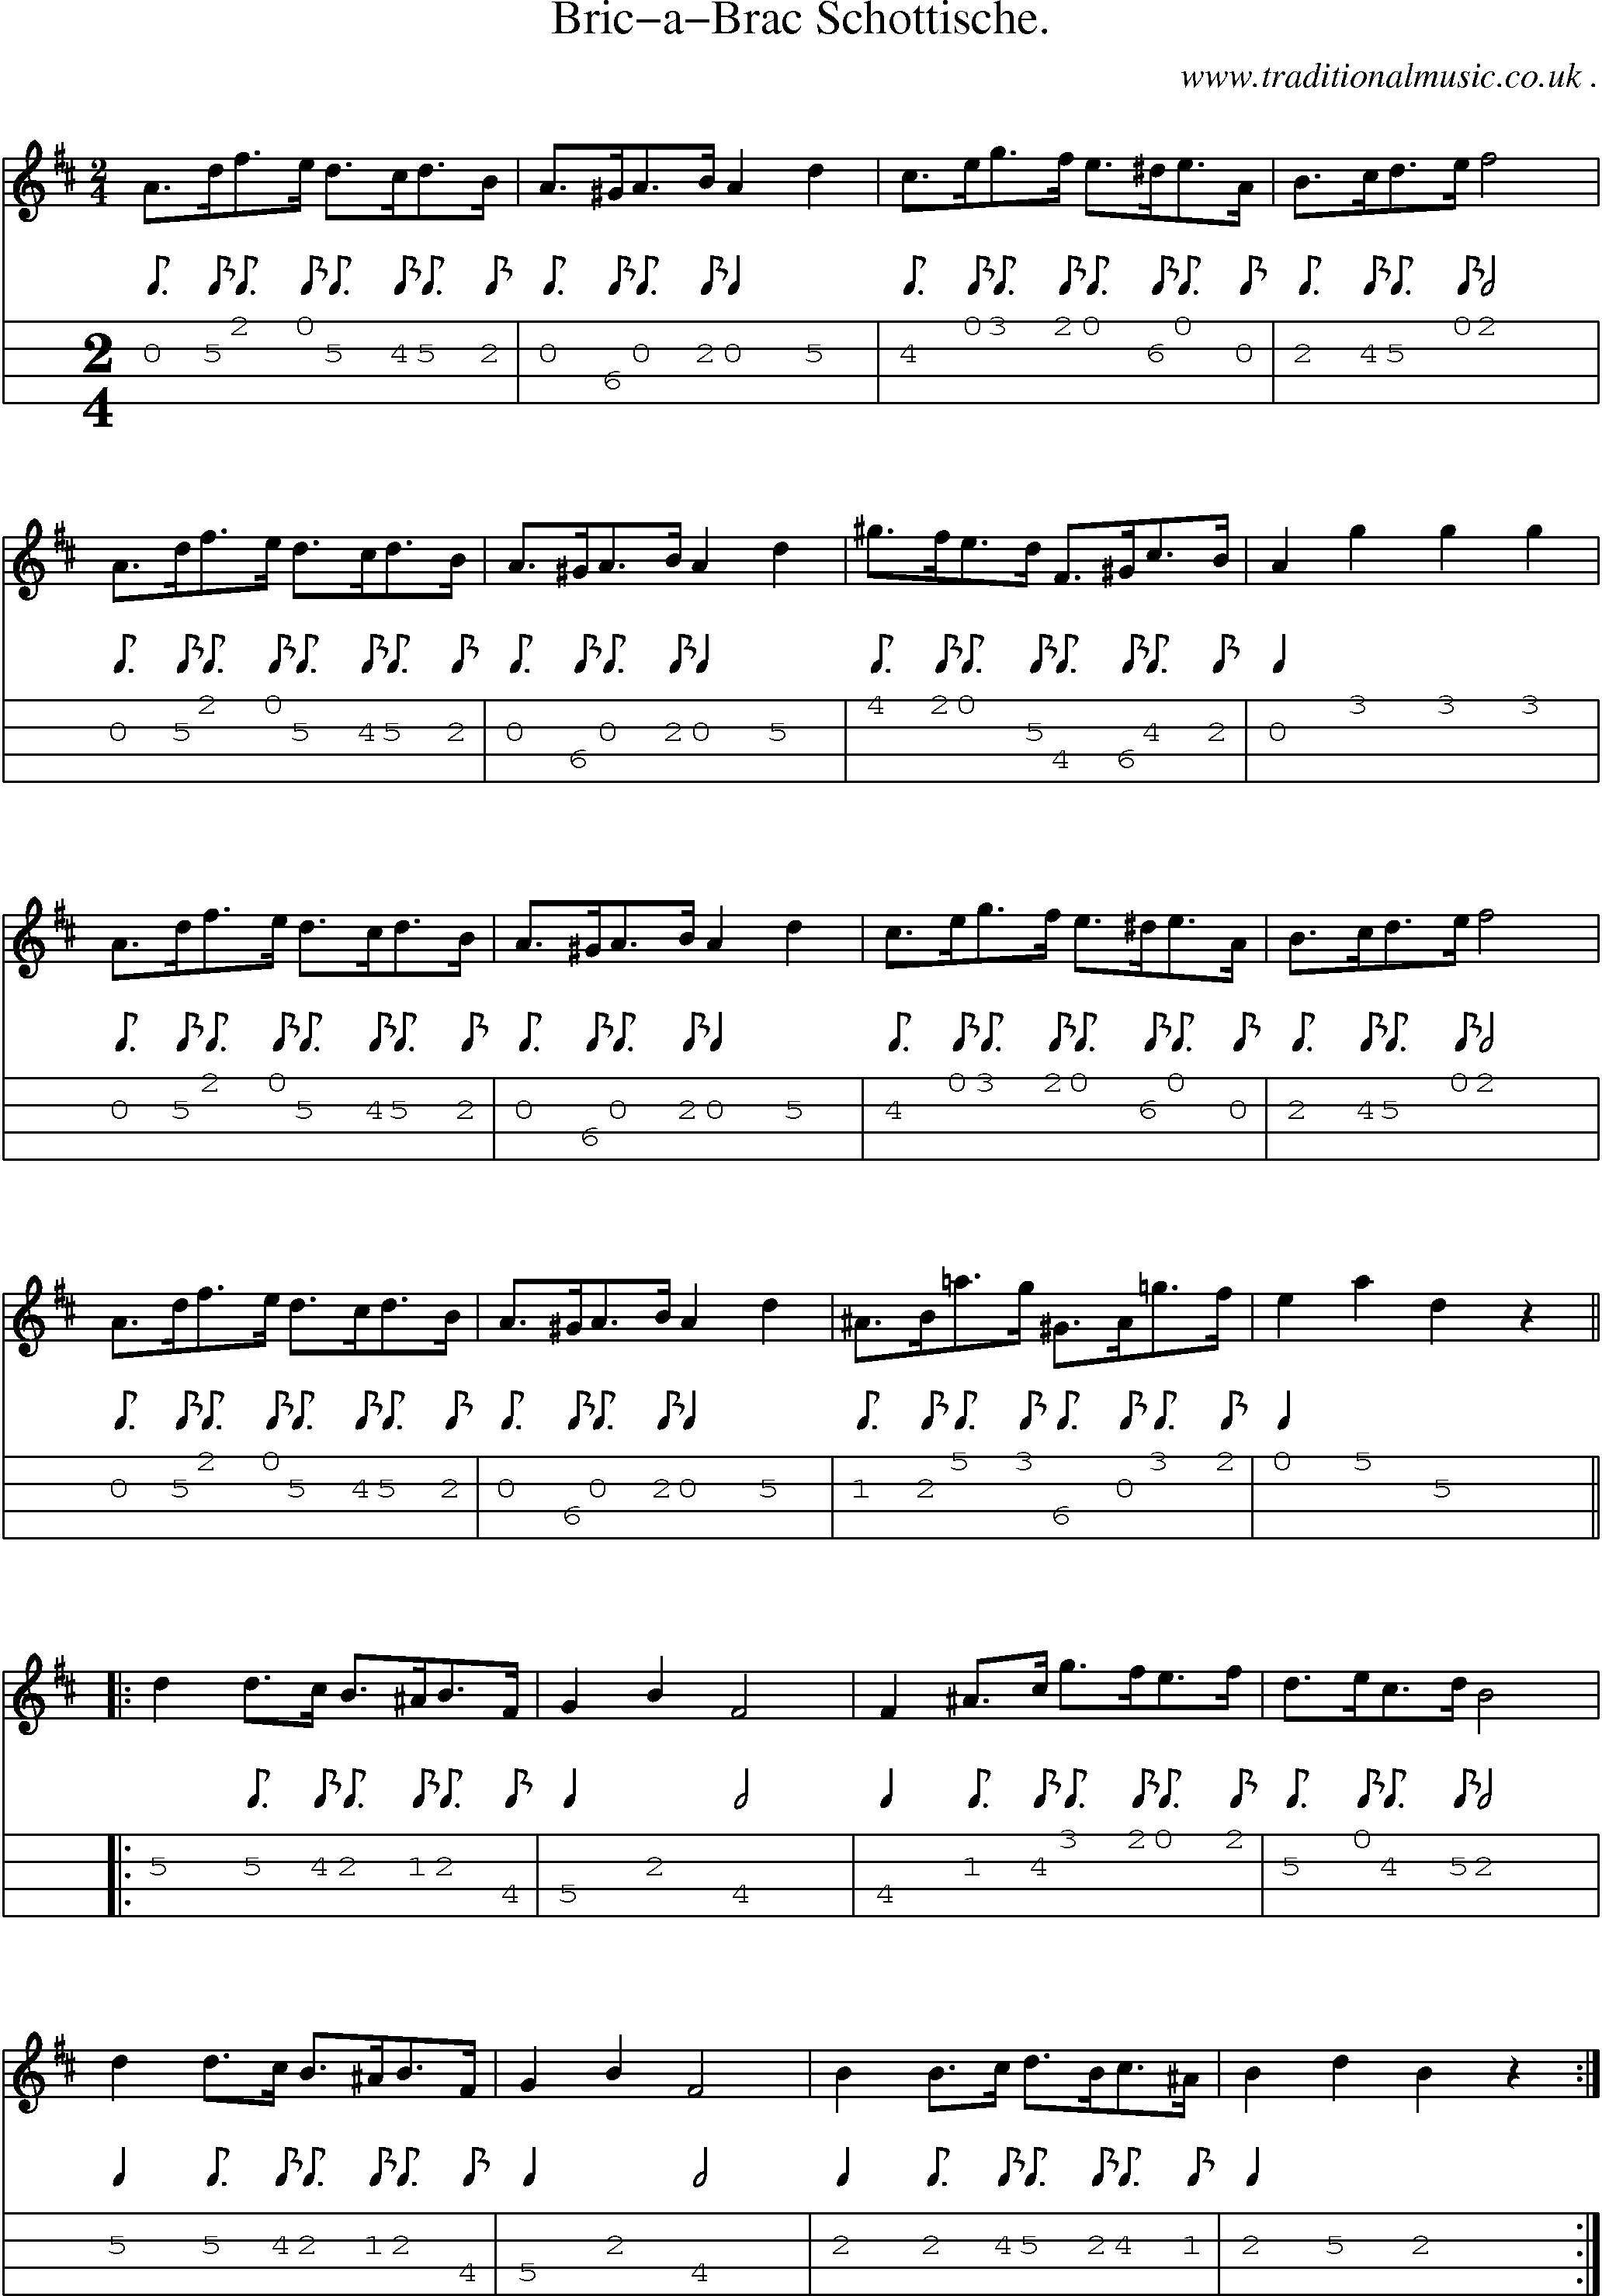 Sheet-Music and Mandolin Tabs for Bric-a-brac Schottische